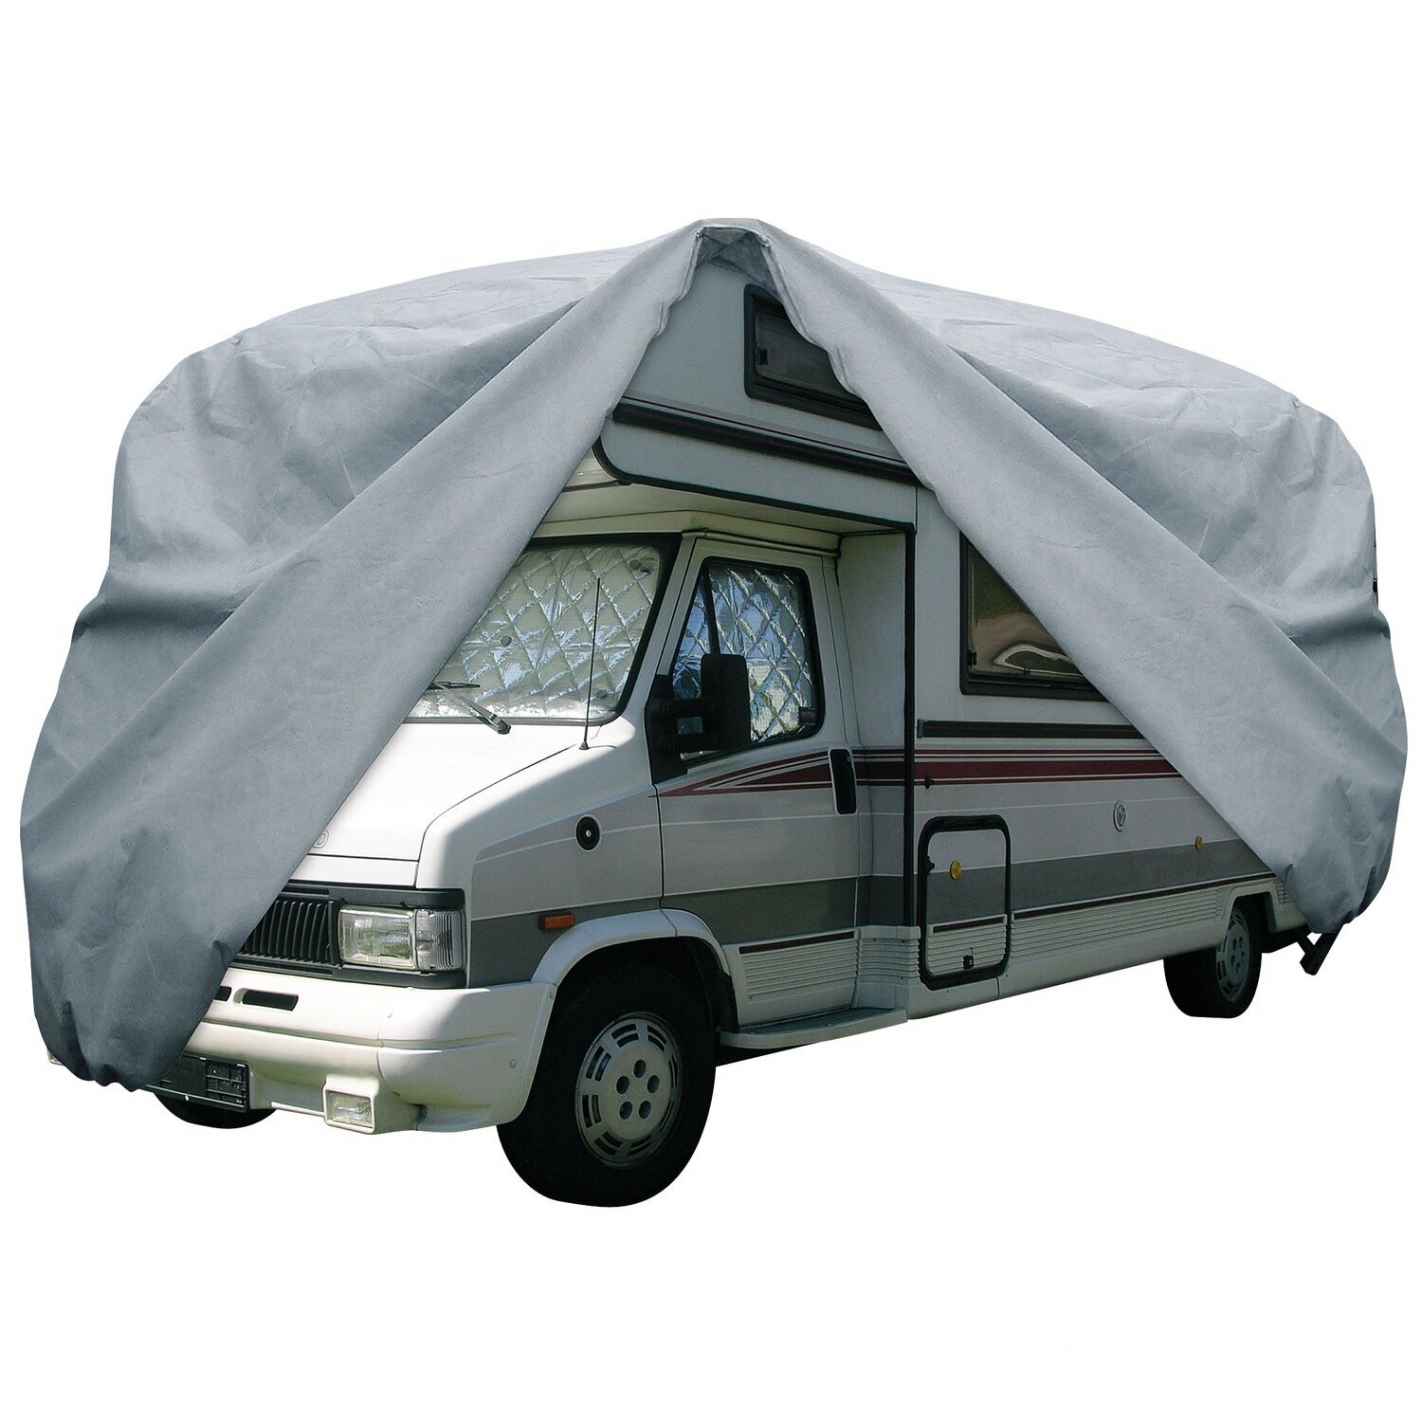 Protection camping car - Équipement caravaning